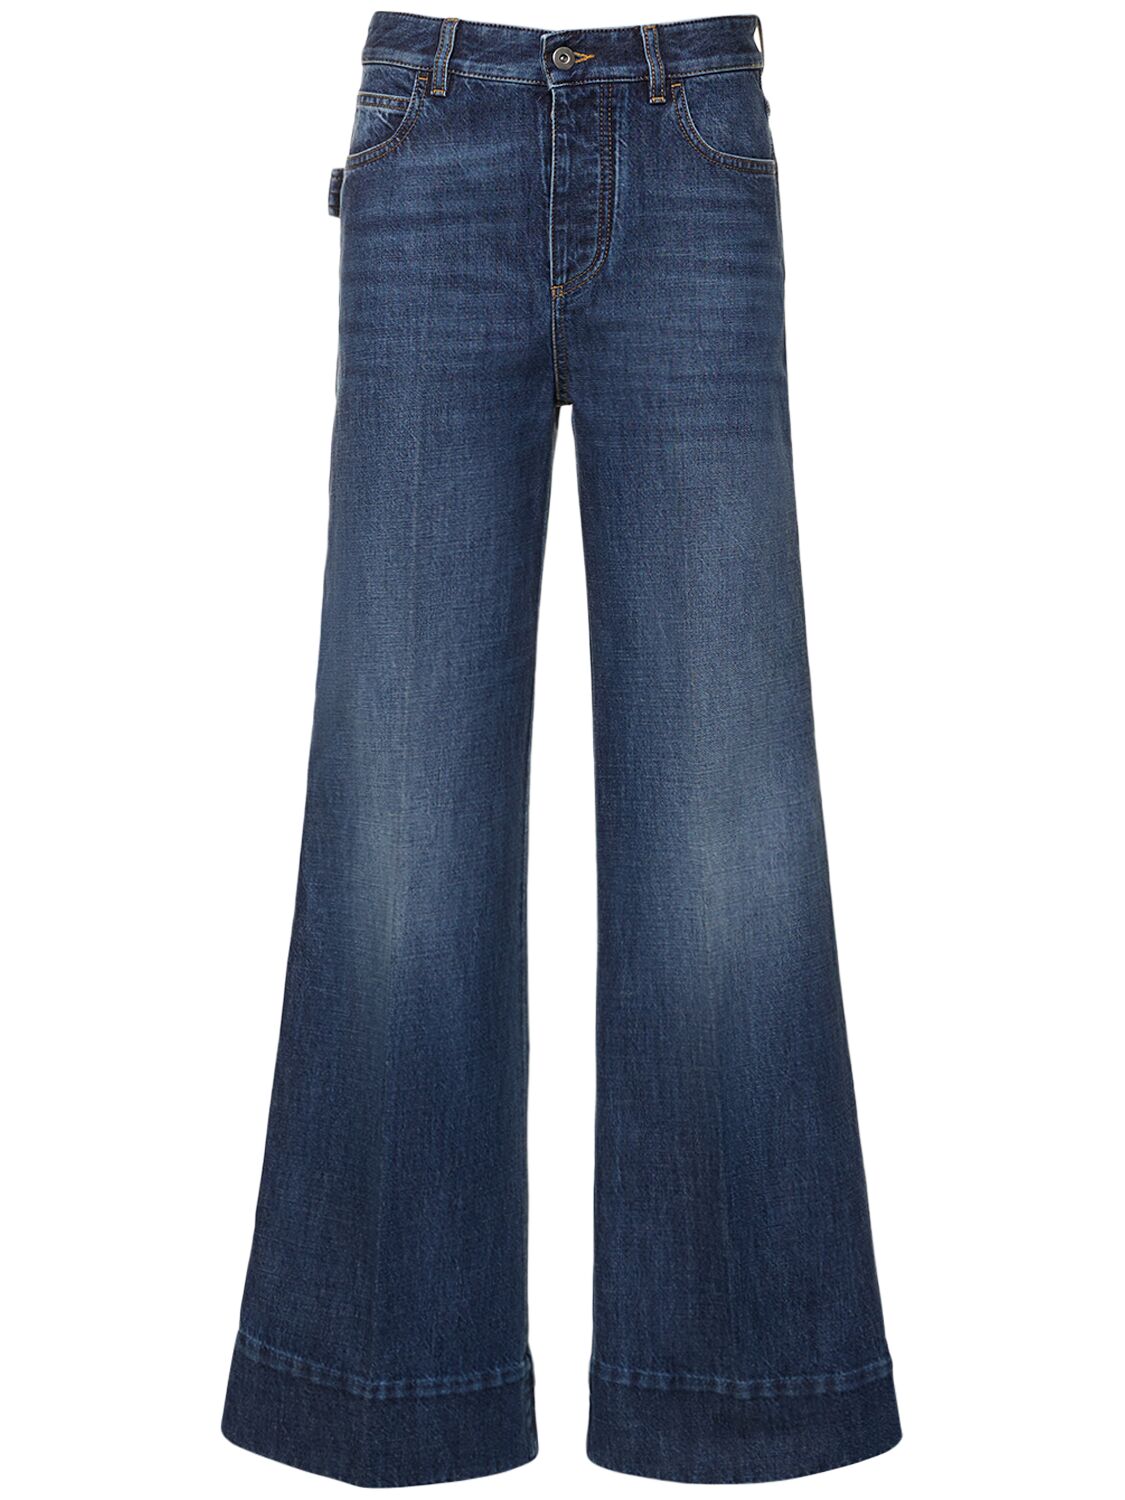 Medium Washed Denim Jeans